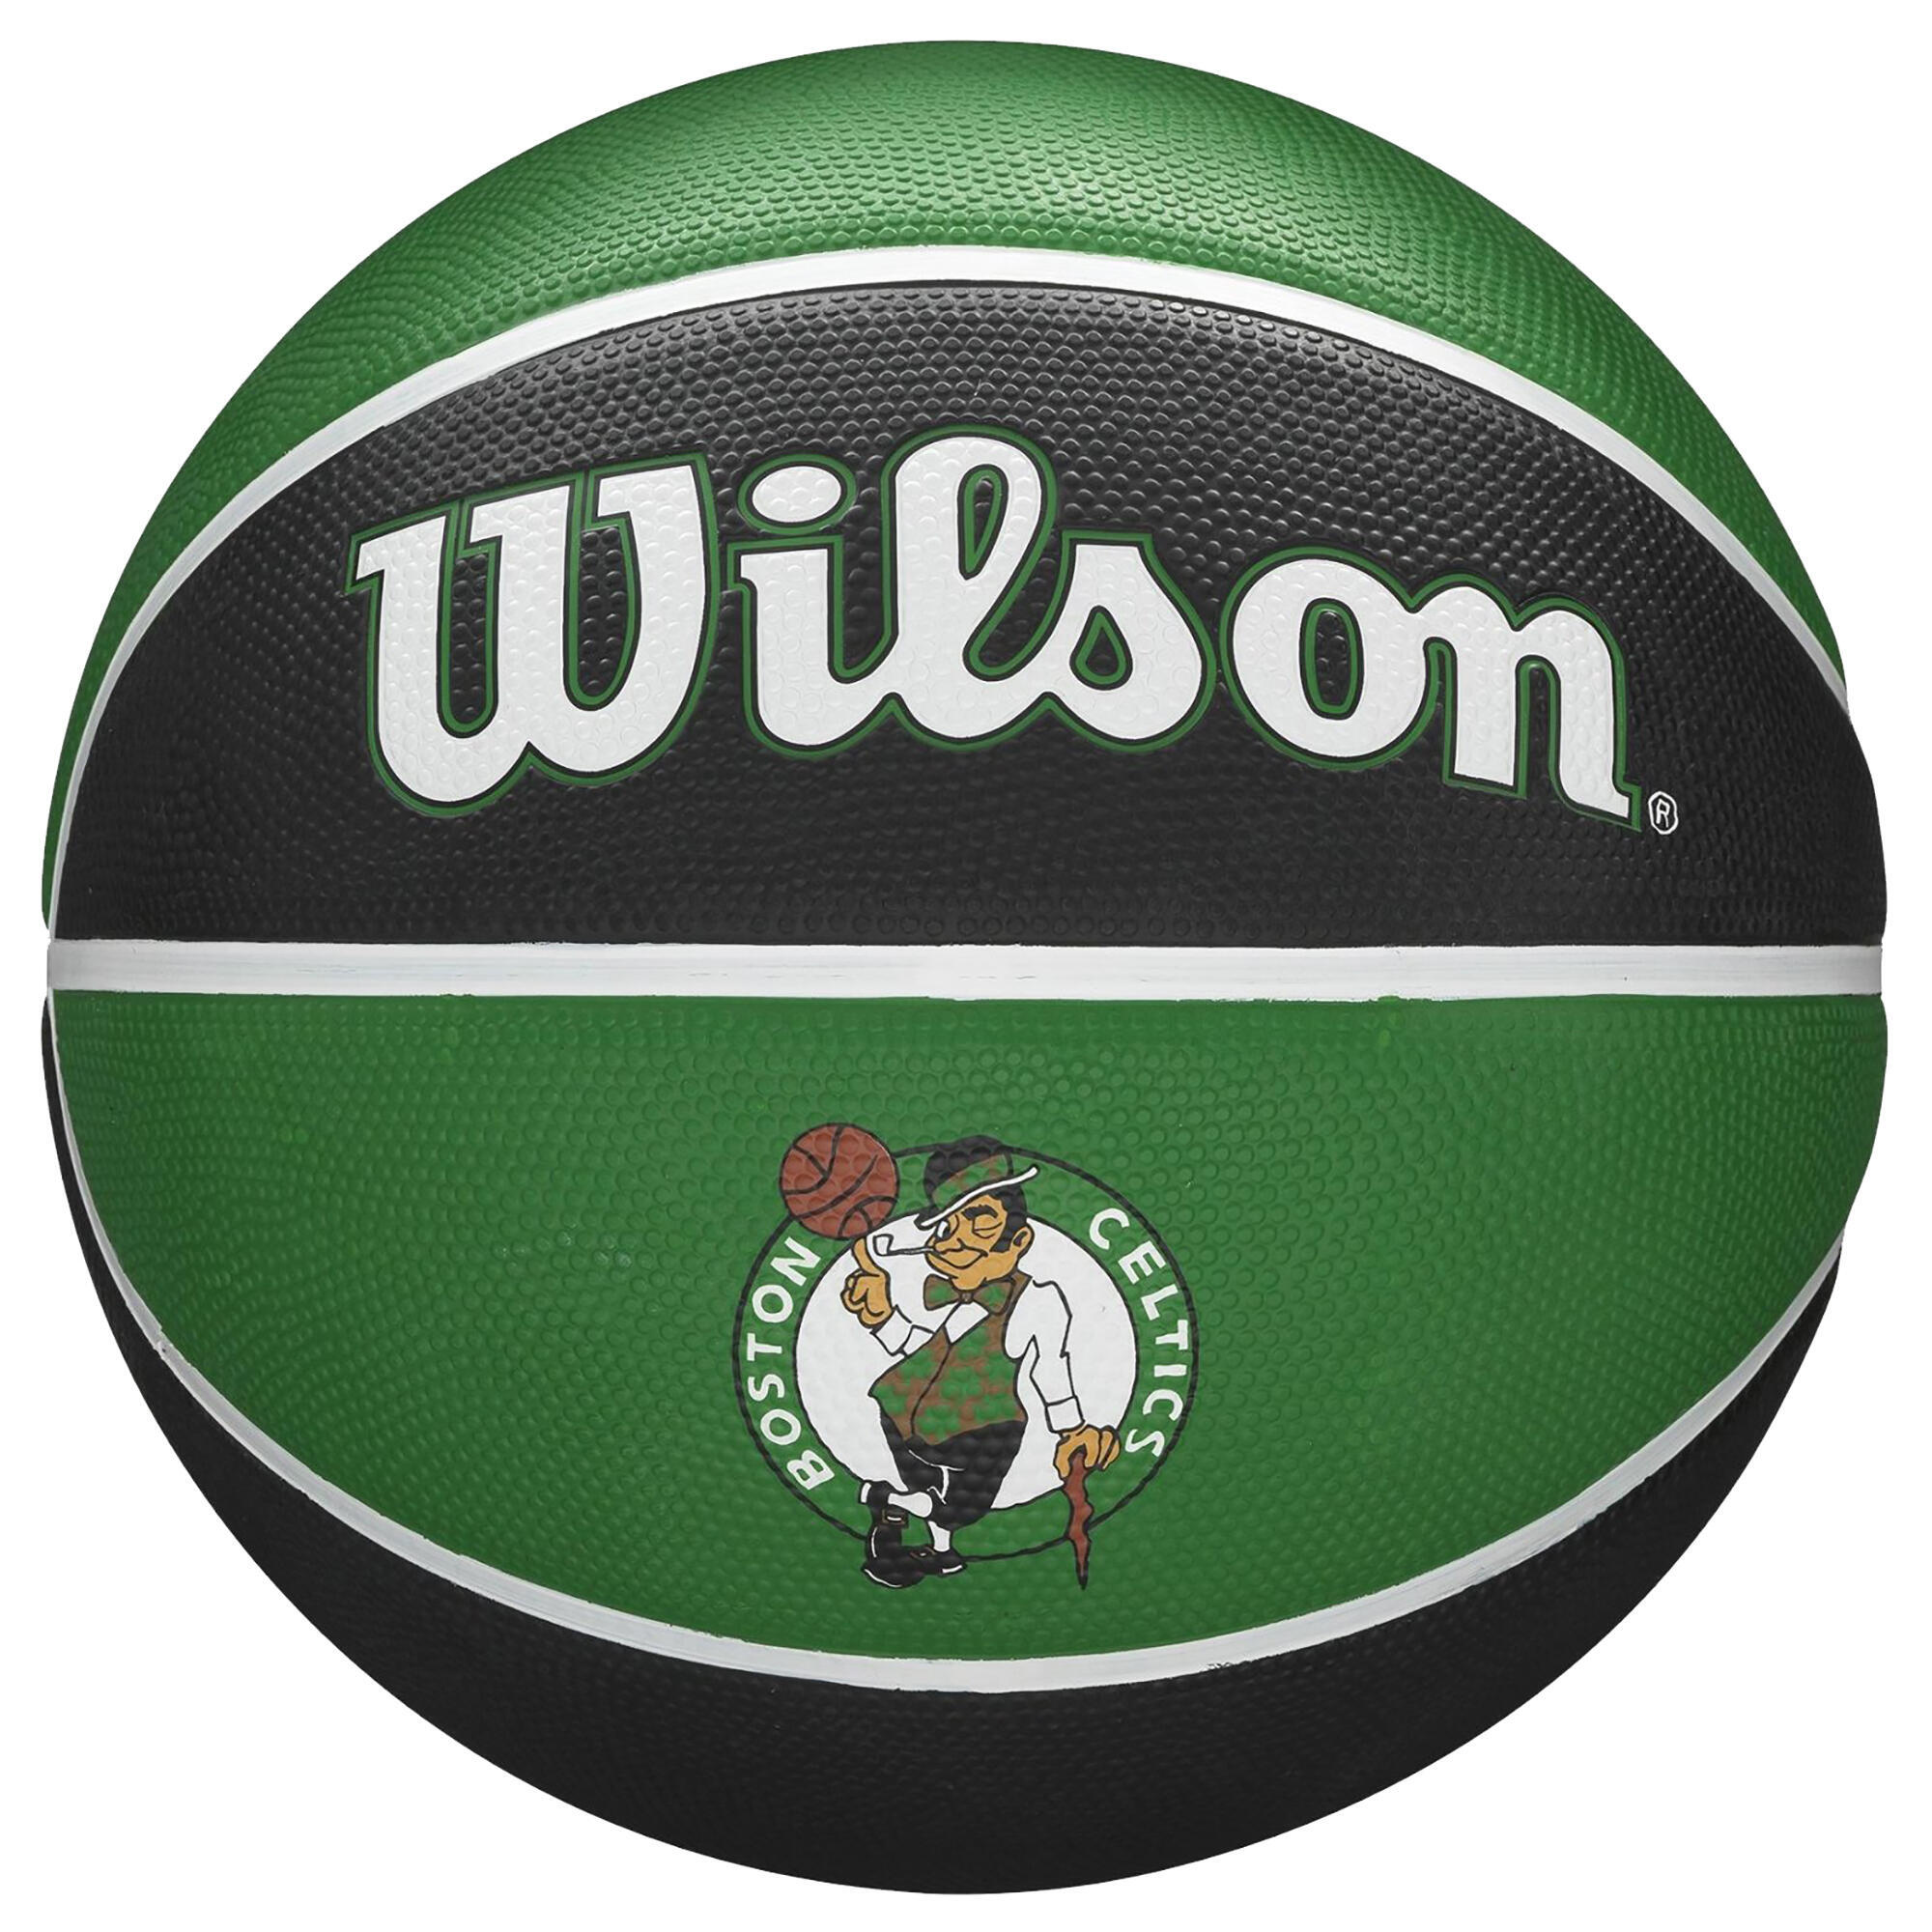 баскетбольный мяч wilson nba team tribute boston celtics wtb1300xbbos р 7 Баскетбольный мяч Wilson Team Tribute Celtics NBA размер 7 зеленый/черный